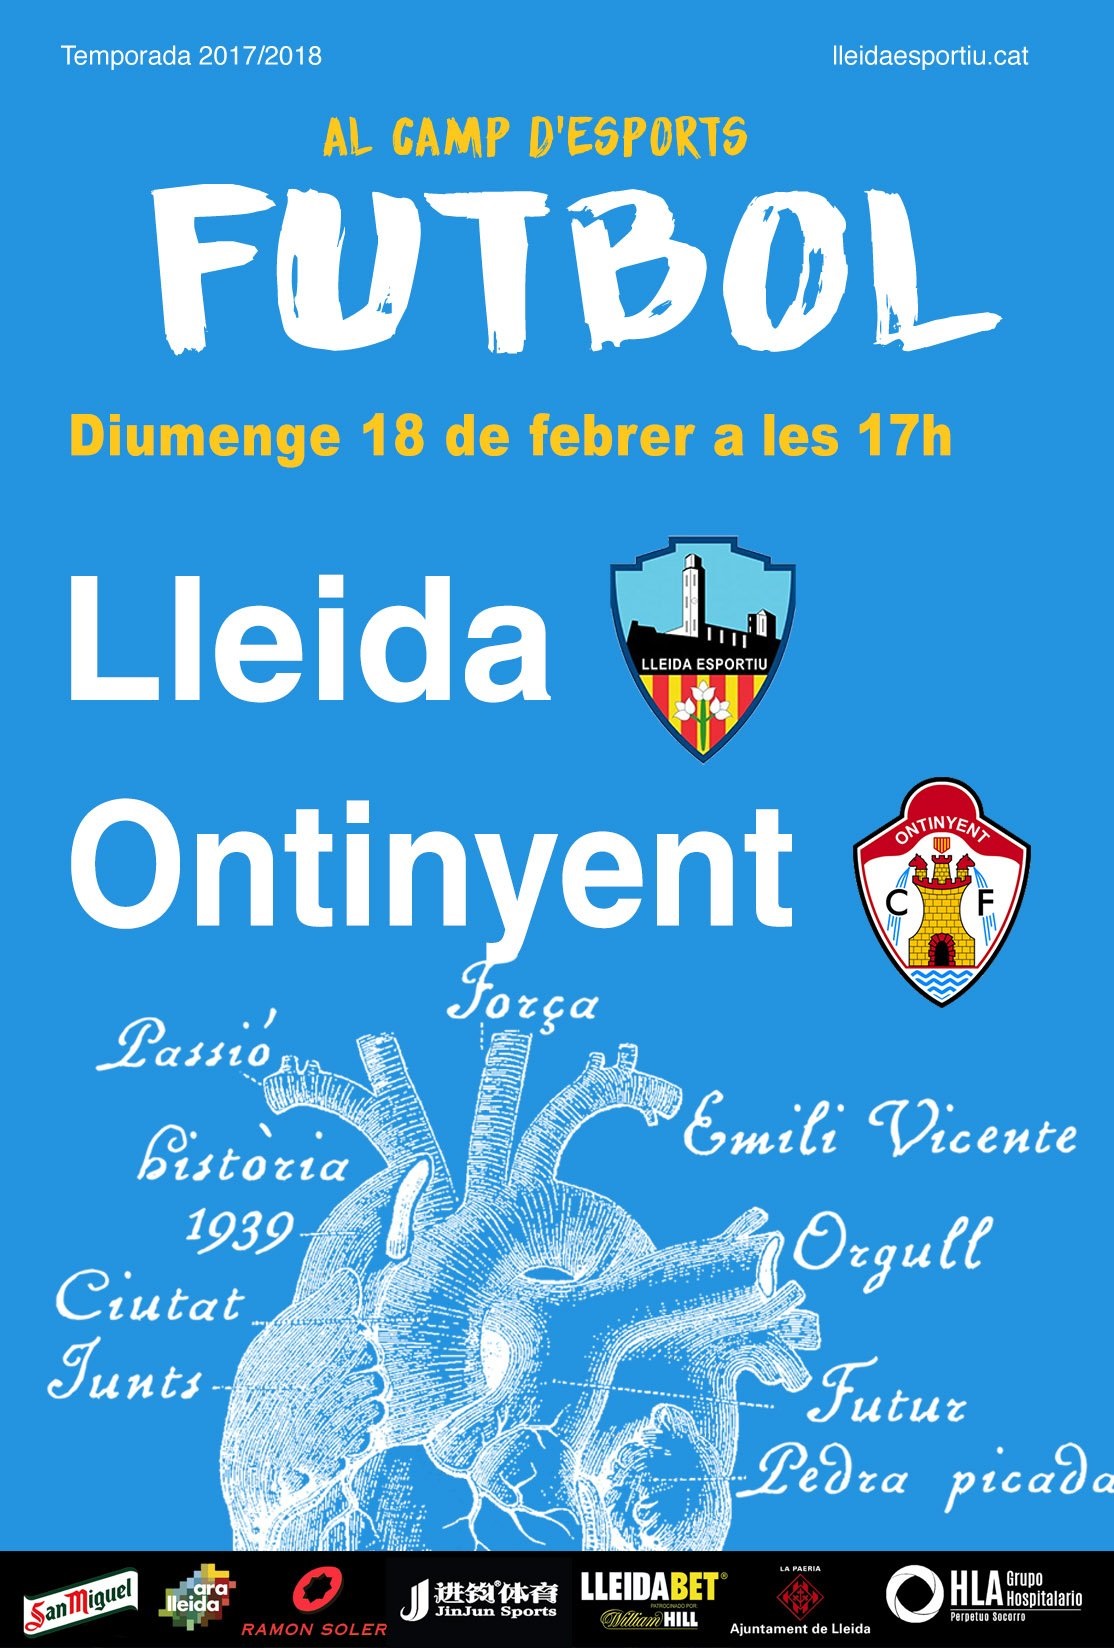 Lleida esportiu - Ontinyent